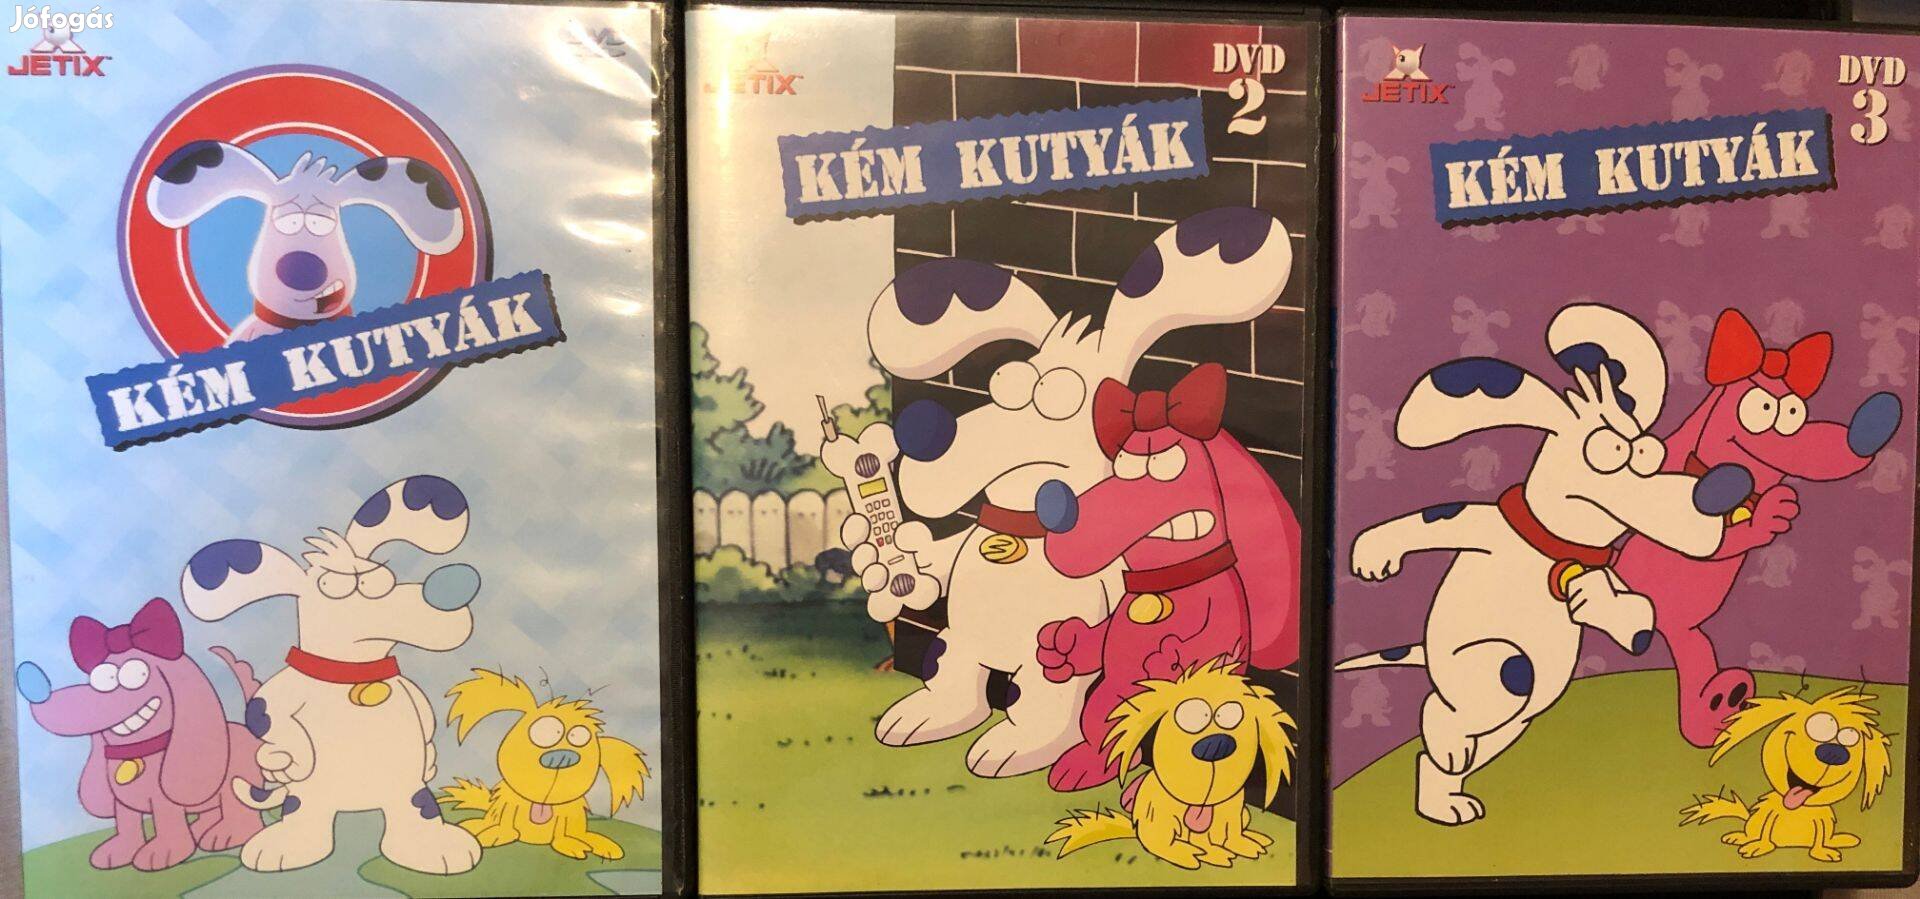 Kém kutyák 1-3.DVD (Jetix kiadás, 3db DVD) DVD